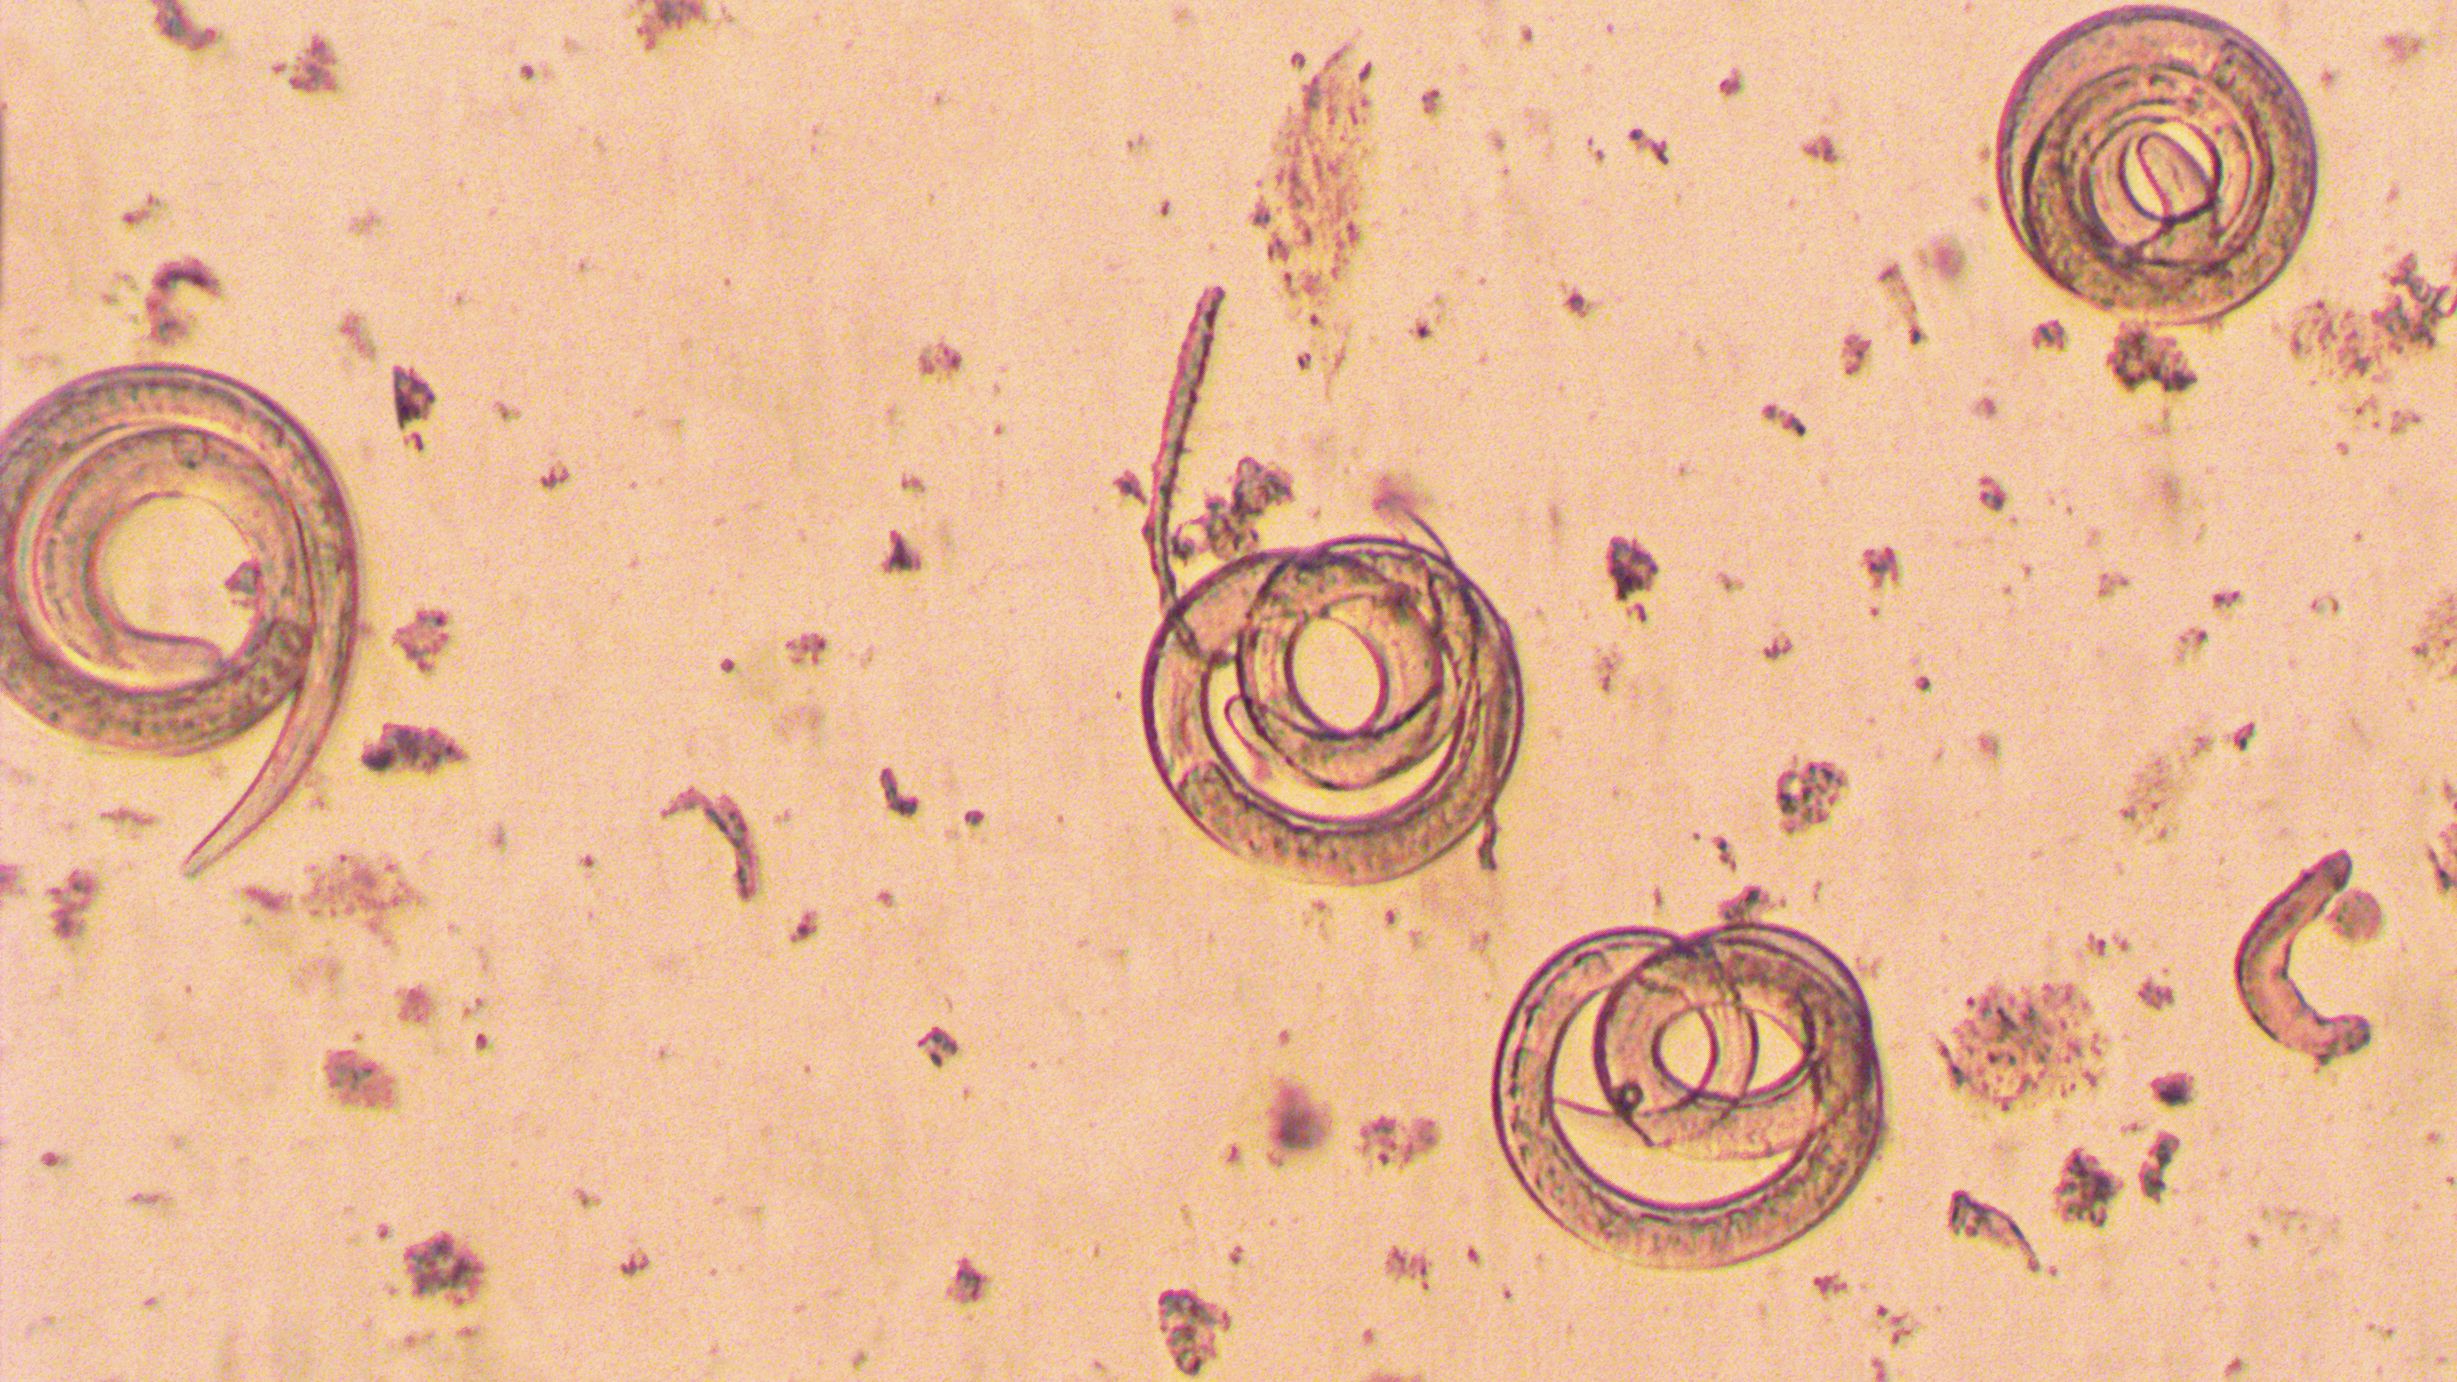 tapeworm parasite